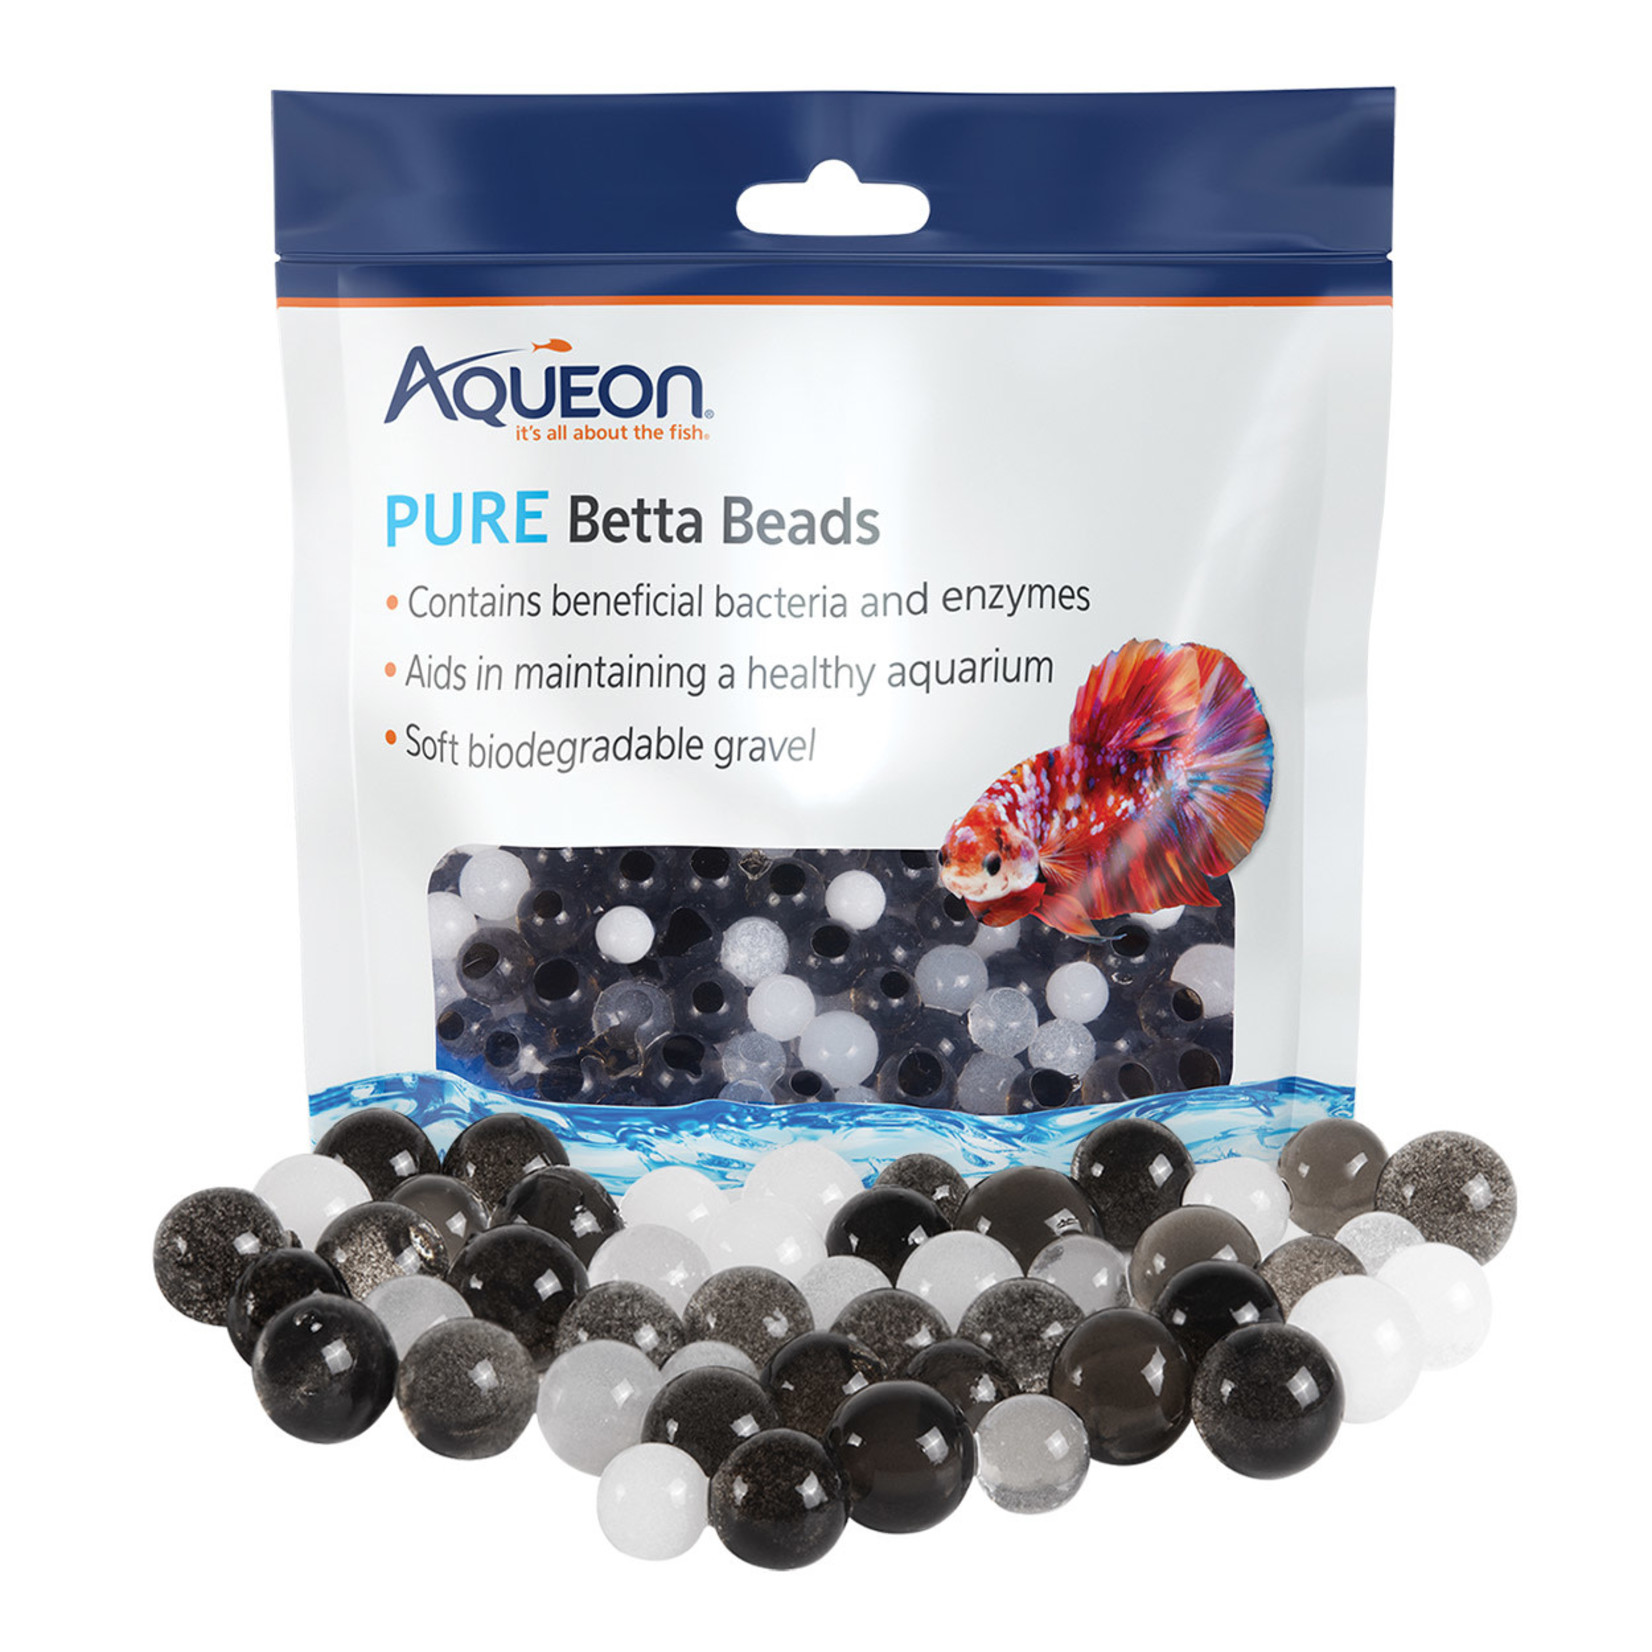 AQUEON Aqueon Pure Betta Beads - Black/White - 350 ml